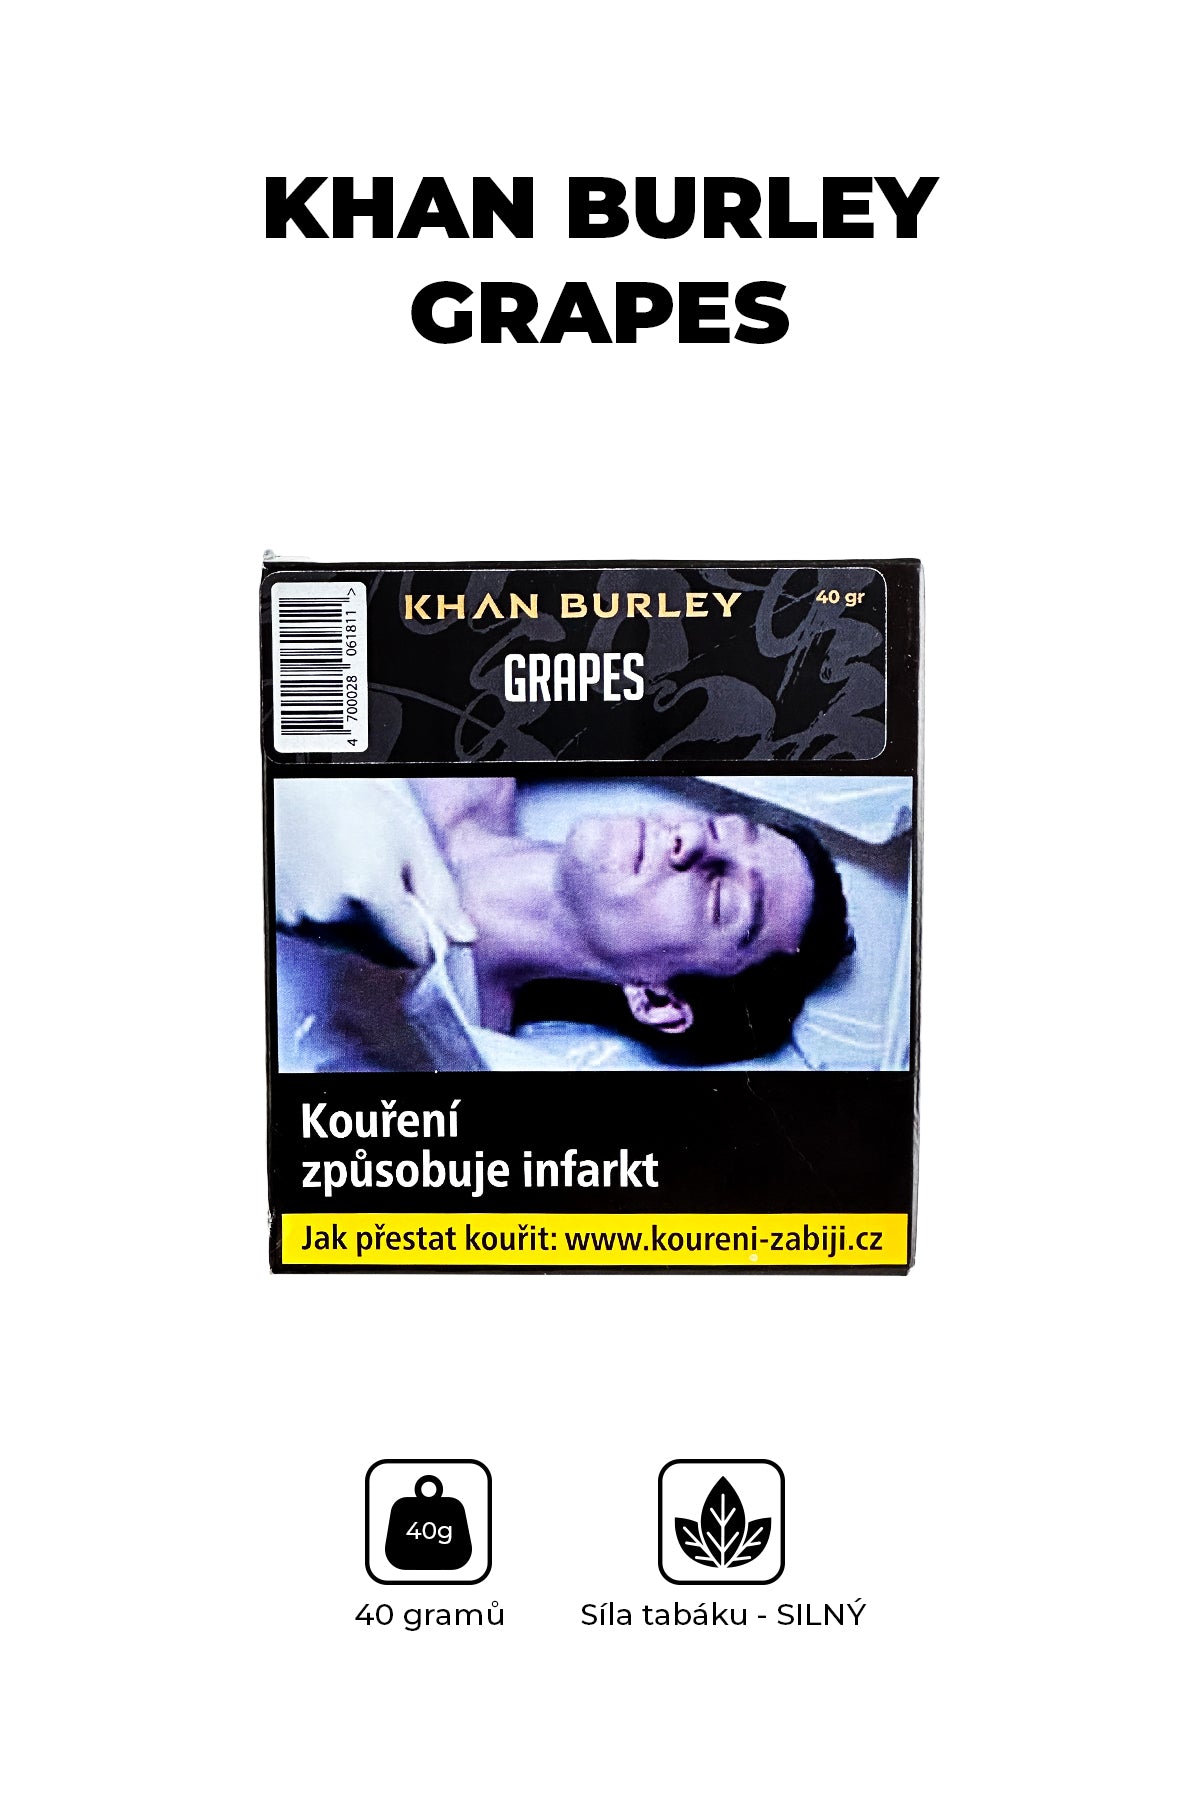 Tabák - Khan Burley 40g - Grapes